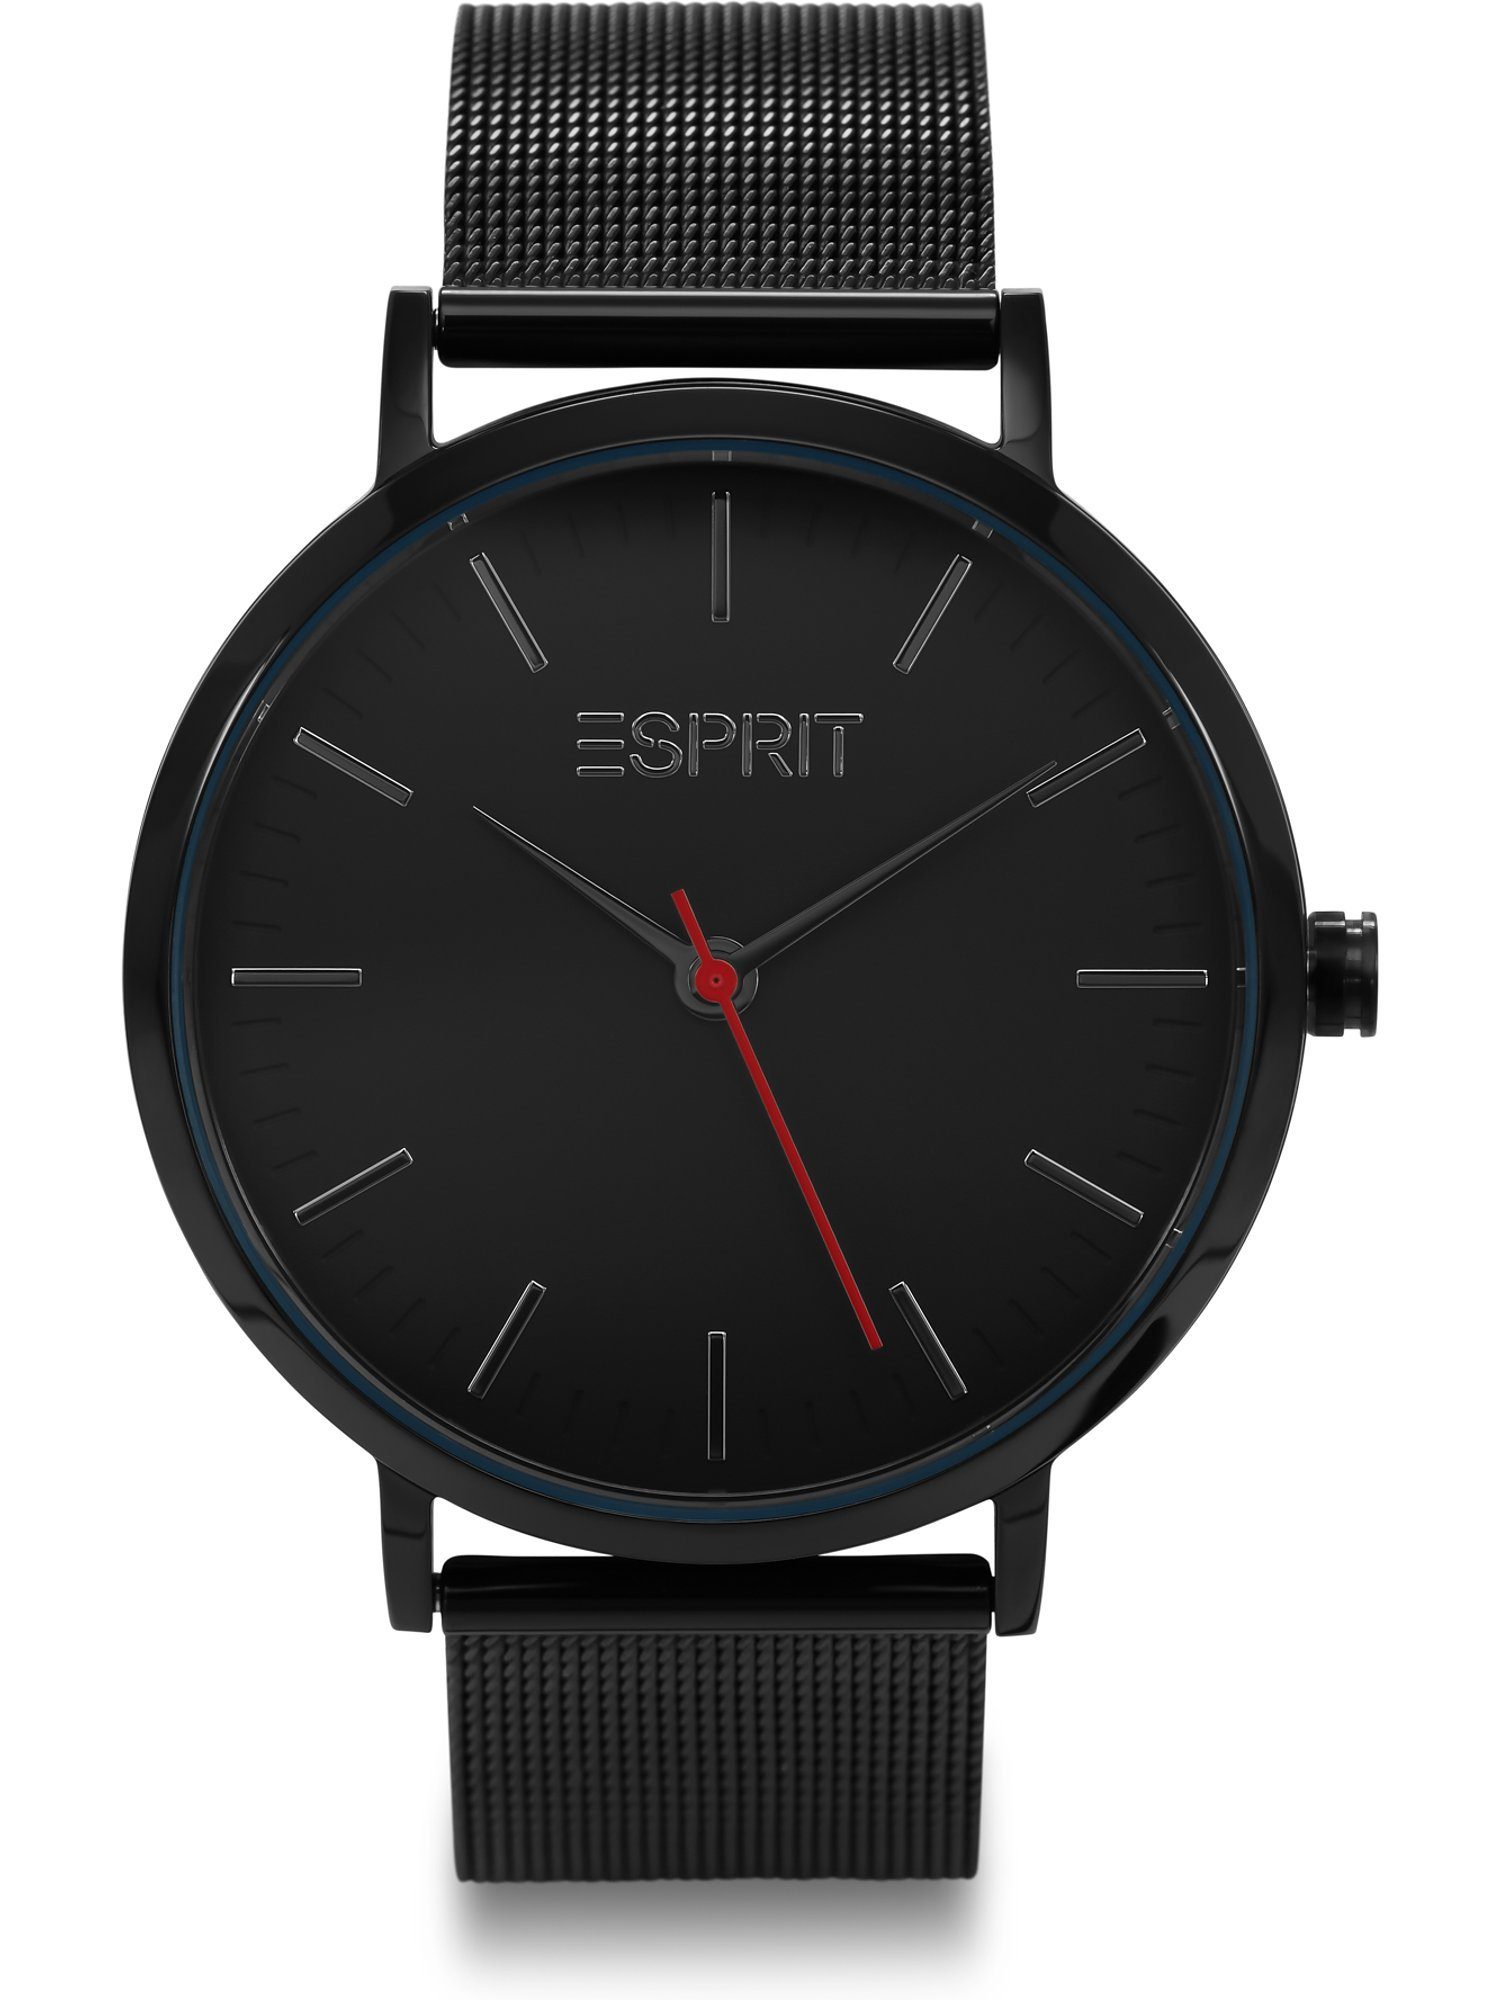 Esprit Quarzuhr ESPRIT Herren-Uhren Analog Quarz, Klassikuhr schwarz